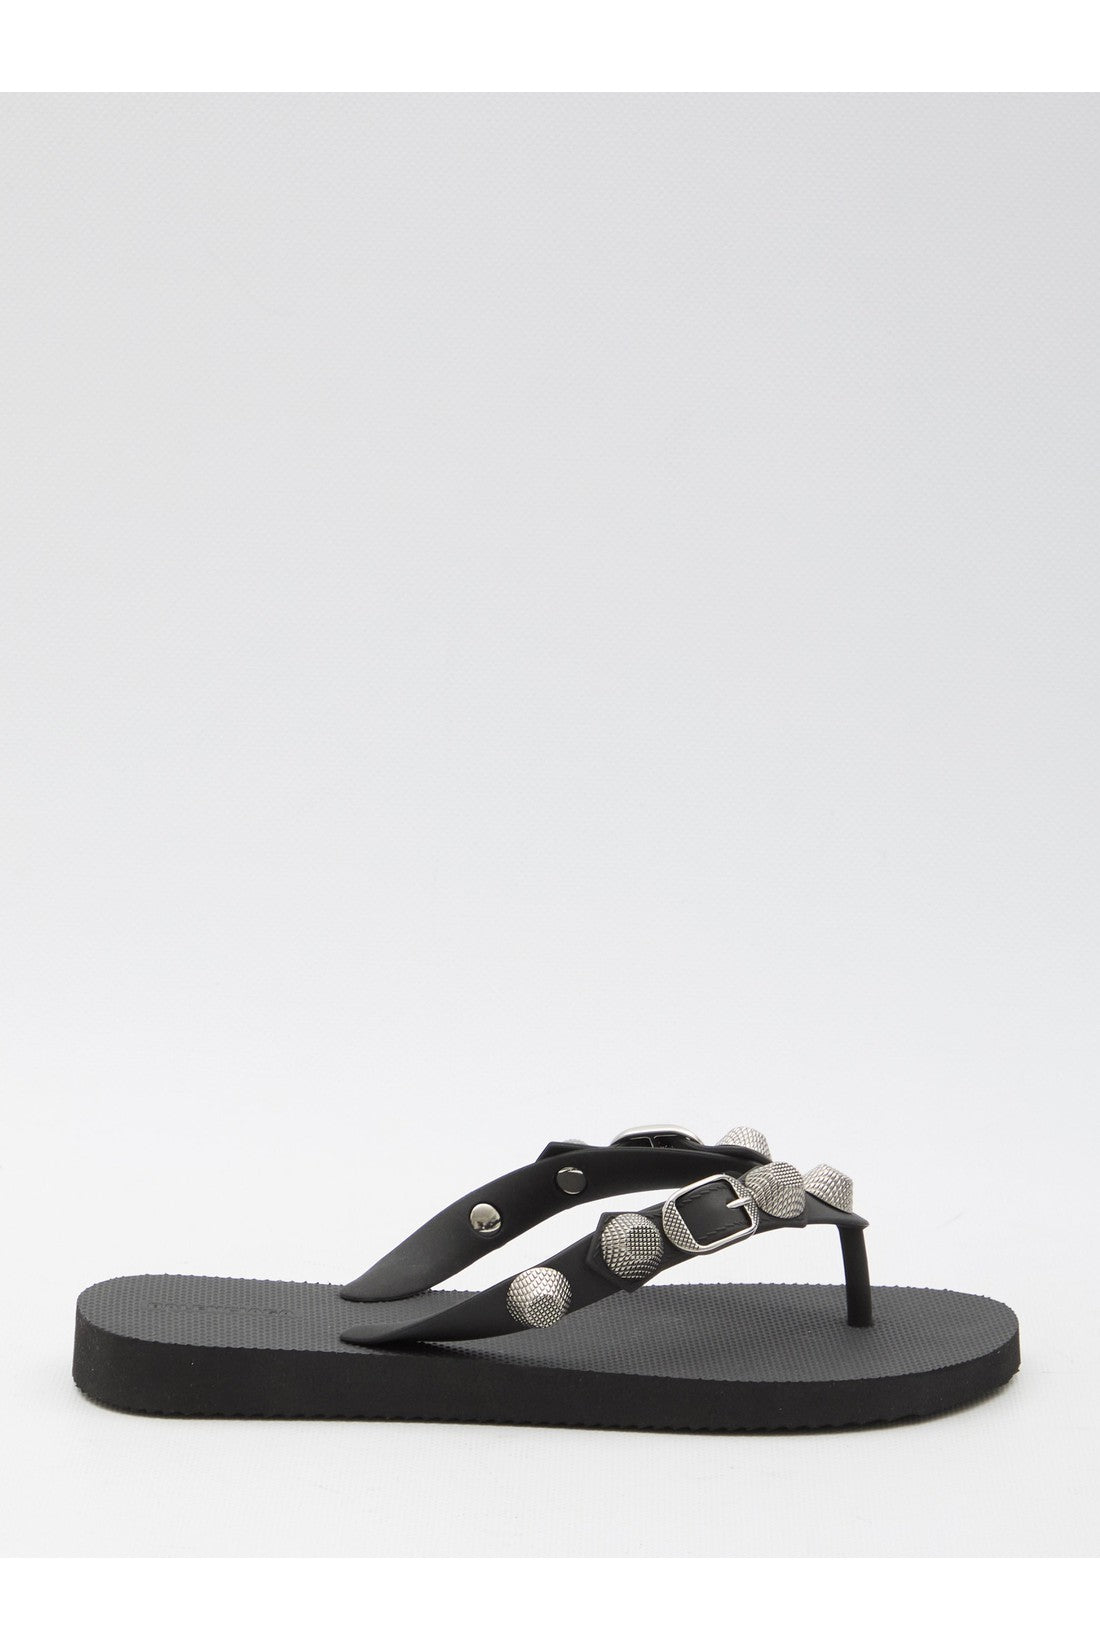 BALENCIAGA-OUTLET-SALE-Cagole-thong-sandals-Sandalen-35-BLACK-ARCHIVE-COLLECTION.jpg